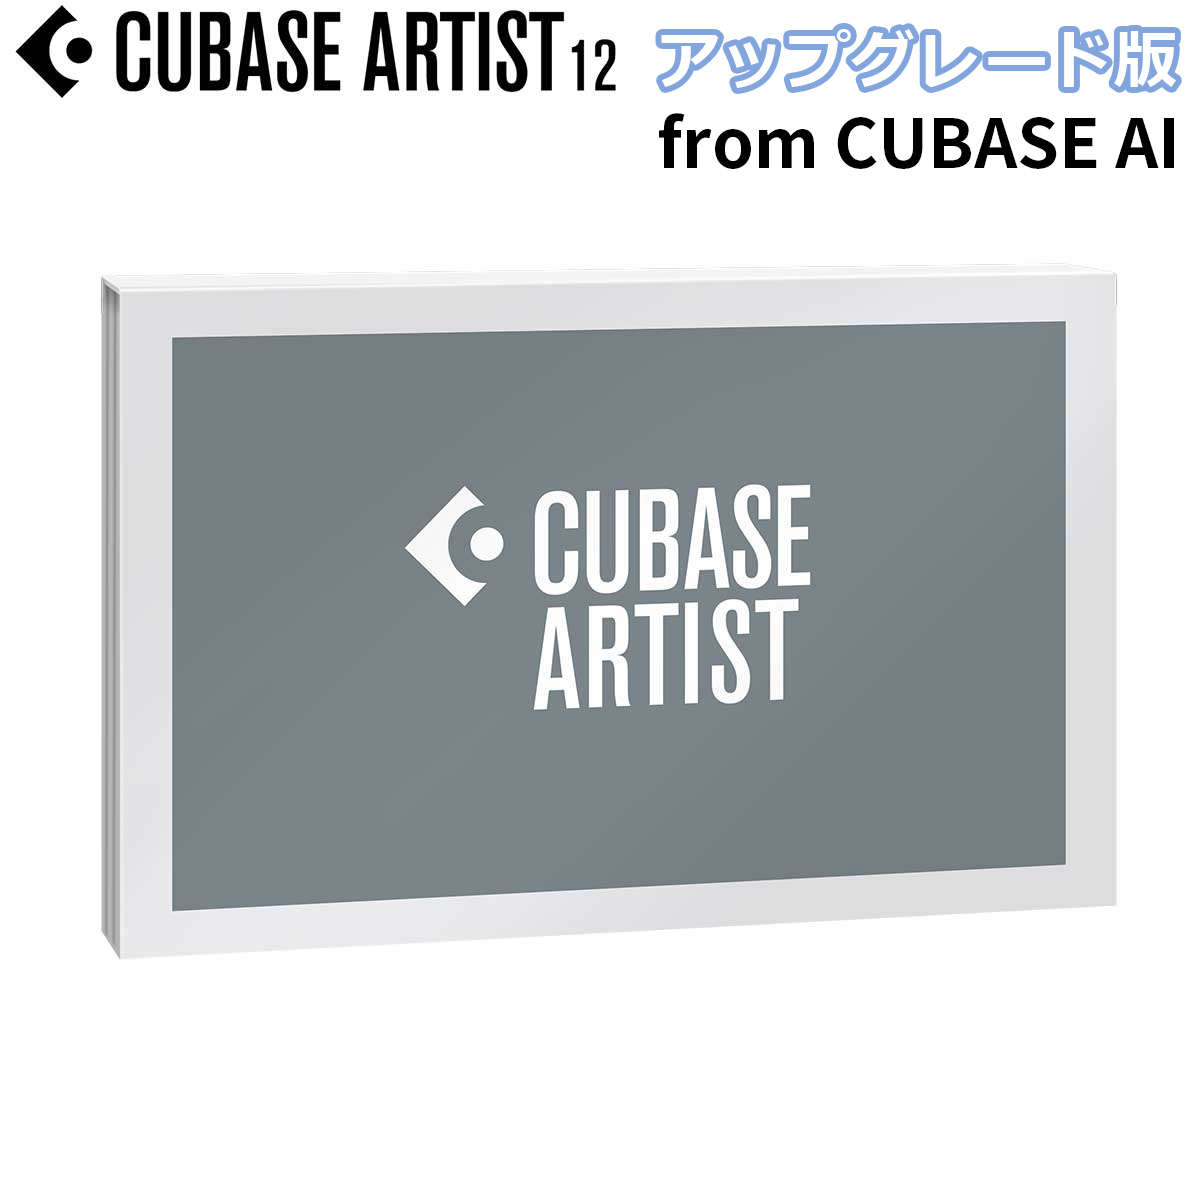 Steinberg(スタインバーグ)Cubase Artist アップグレード版 from [Cubase AI] 最新バージョン 13